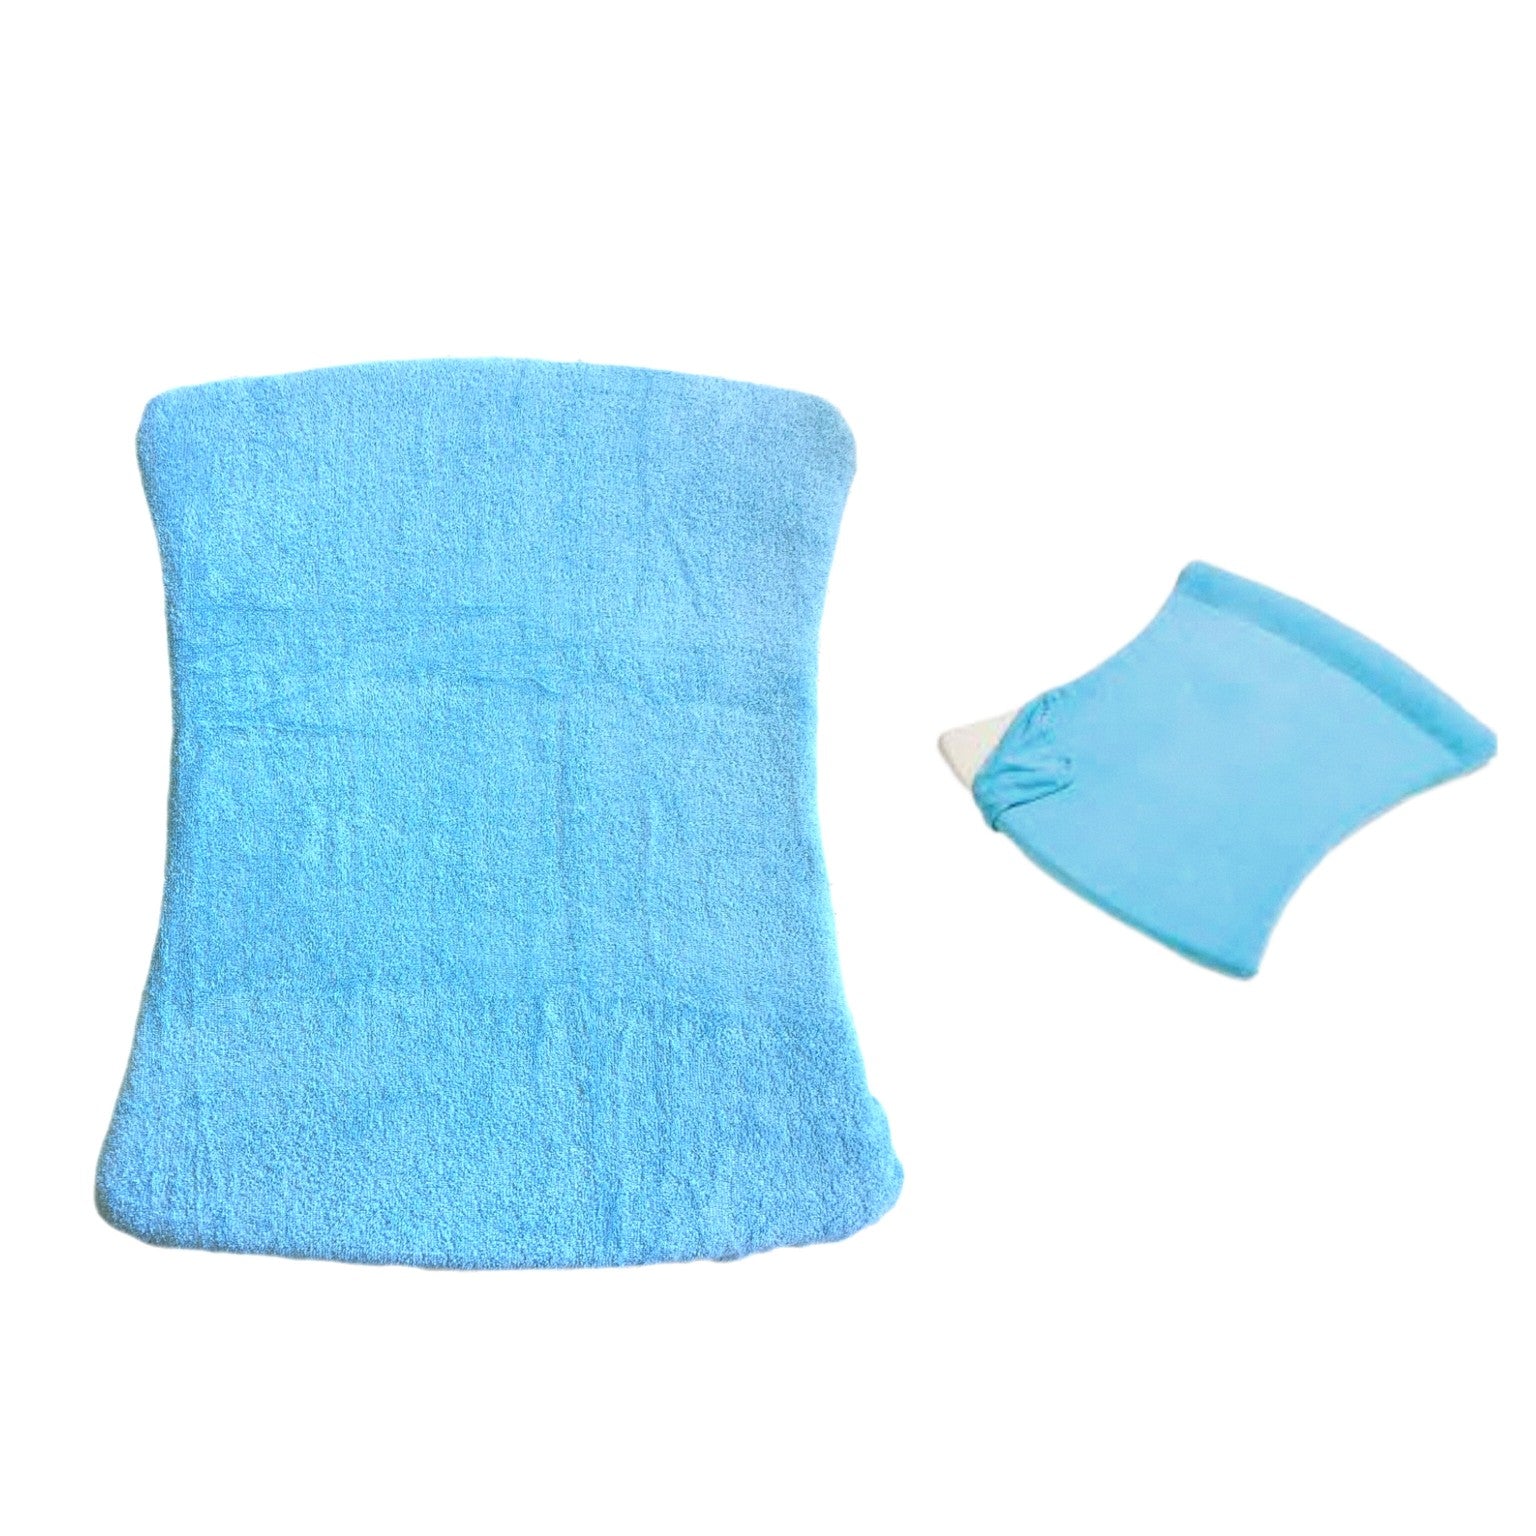 Stokke- Cobertor de felpa para cambiador Care, turquesa